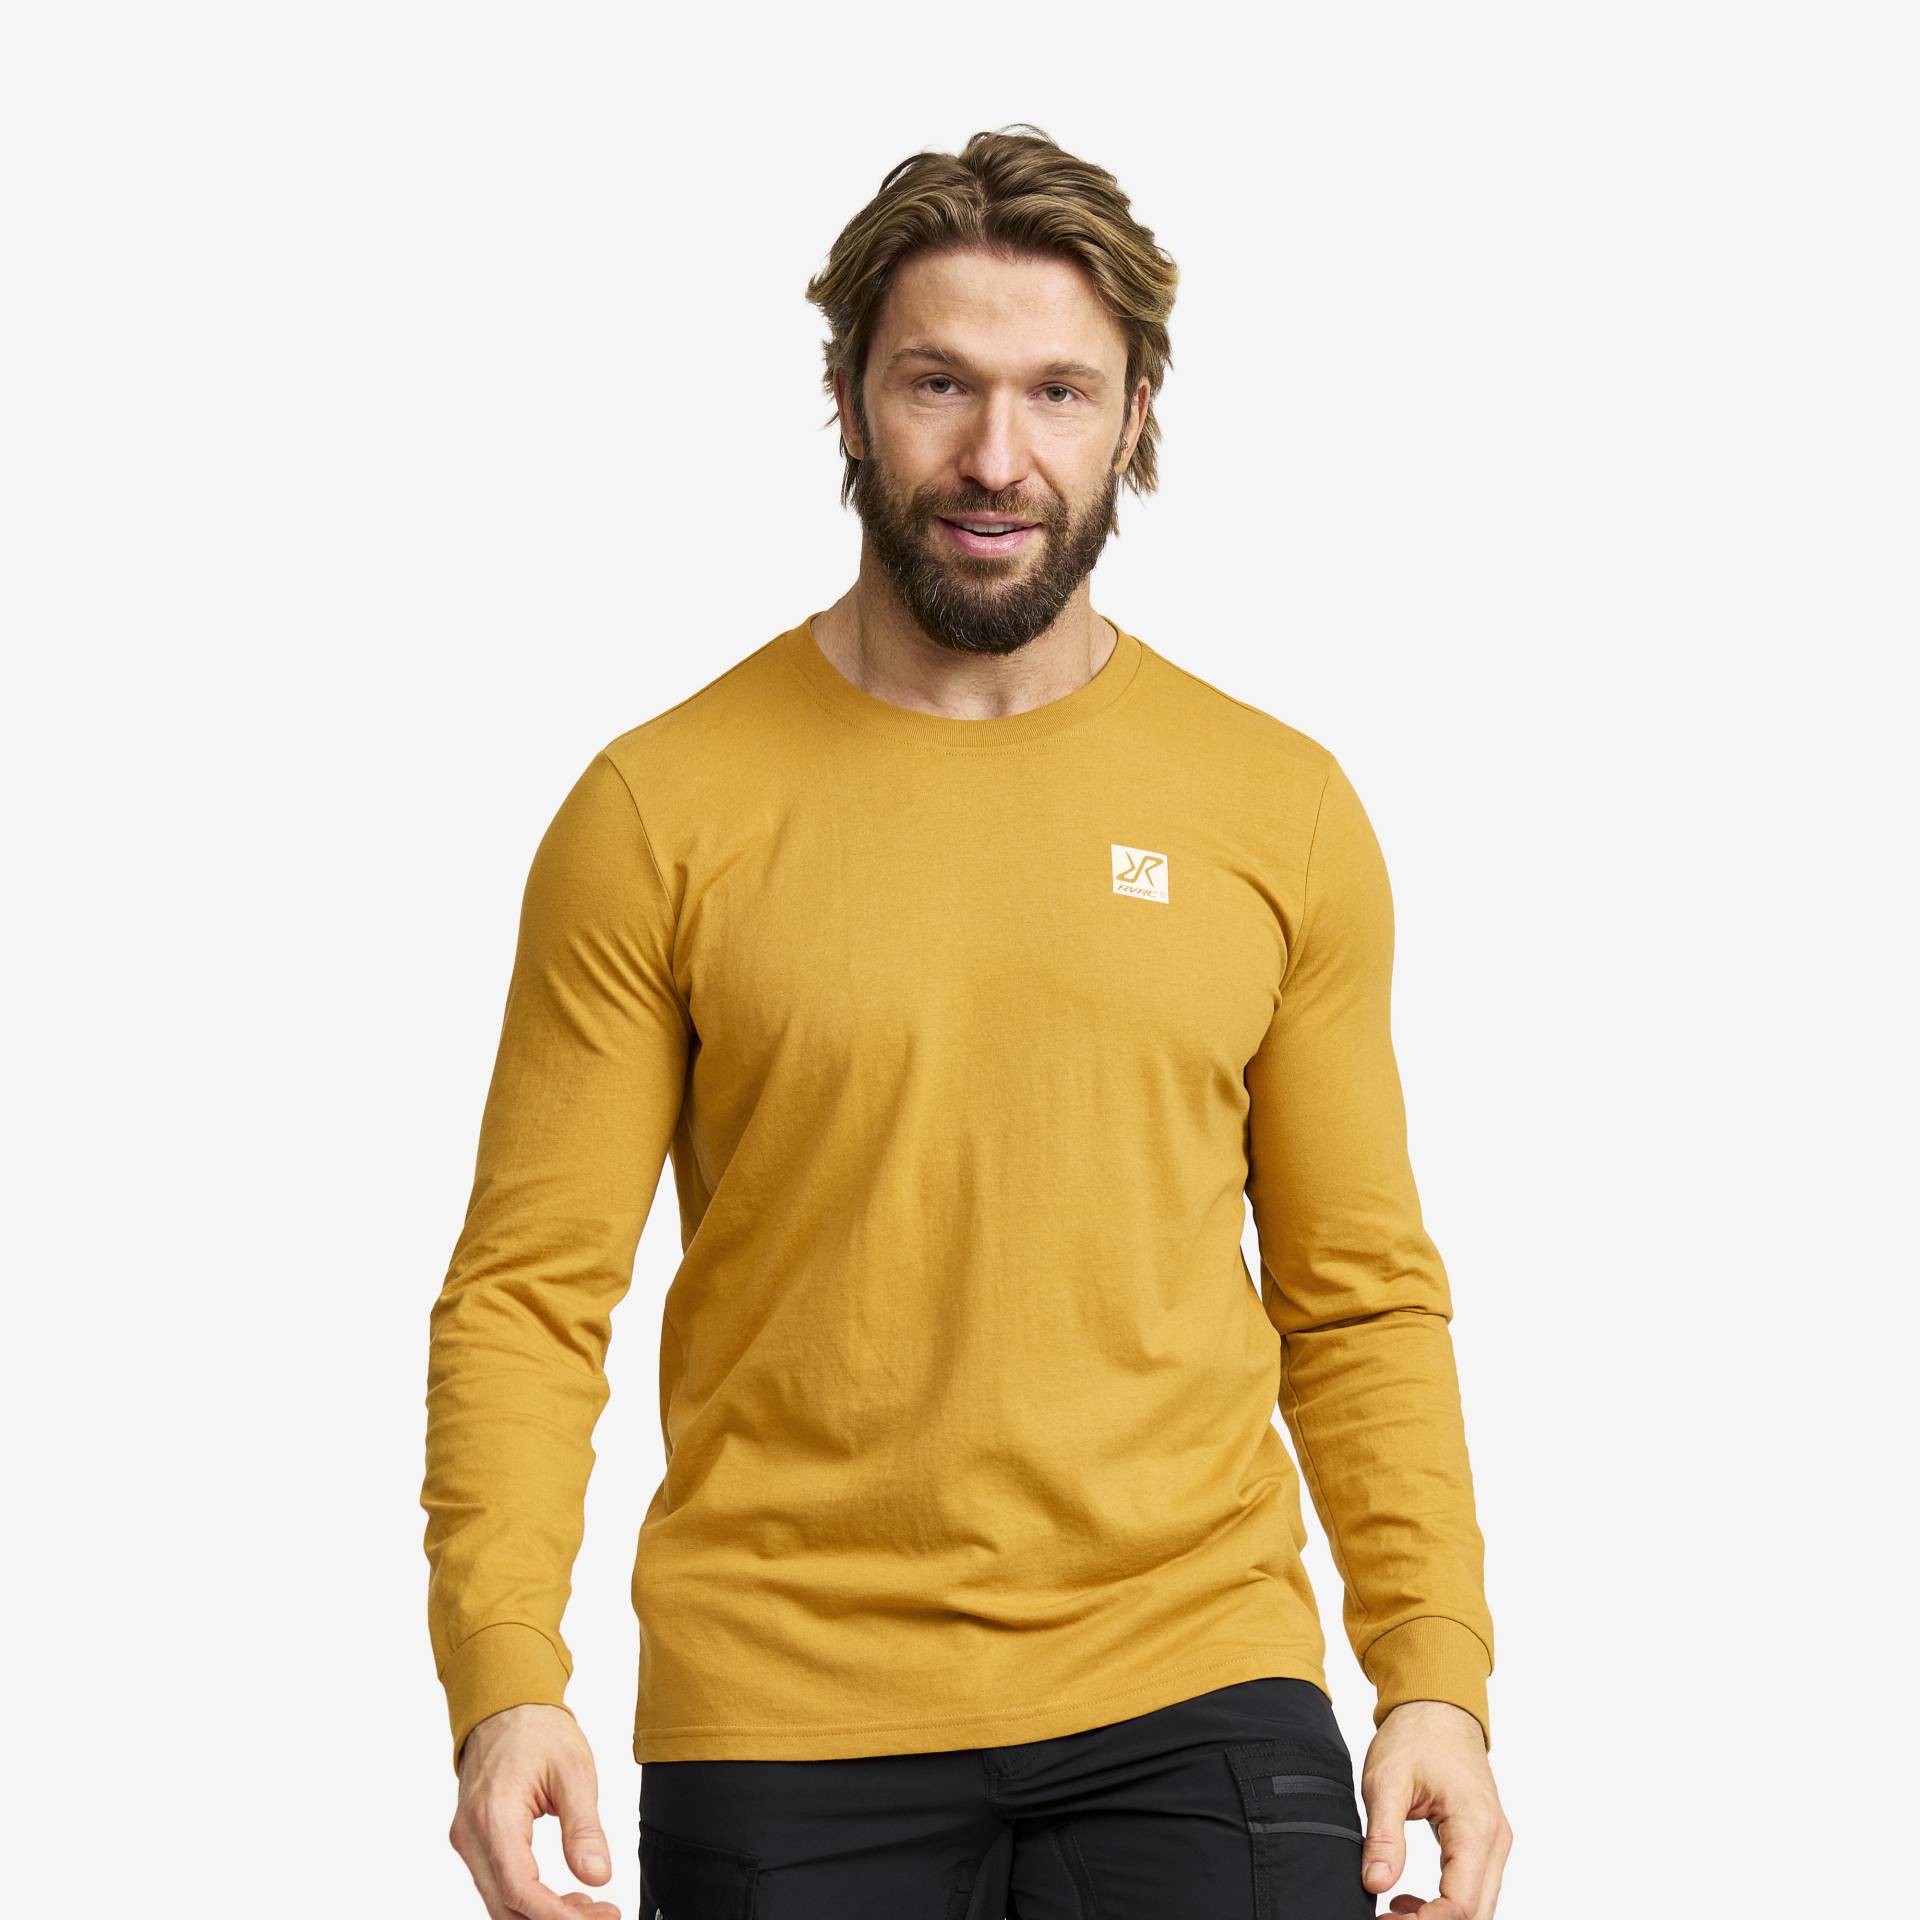 Easy Long-sleeved T-shirt Herren Harvest Gold, Größe:4XL - Bekleidung > Oberteile > Hemden & Langarmshirts von RevolutionRace